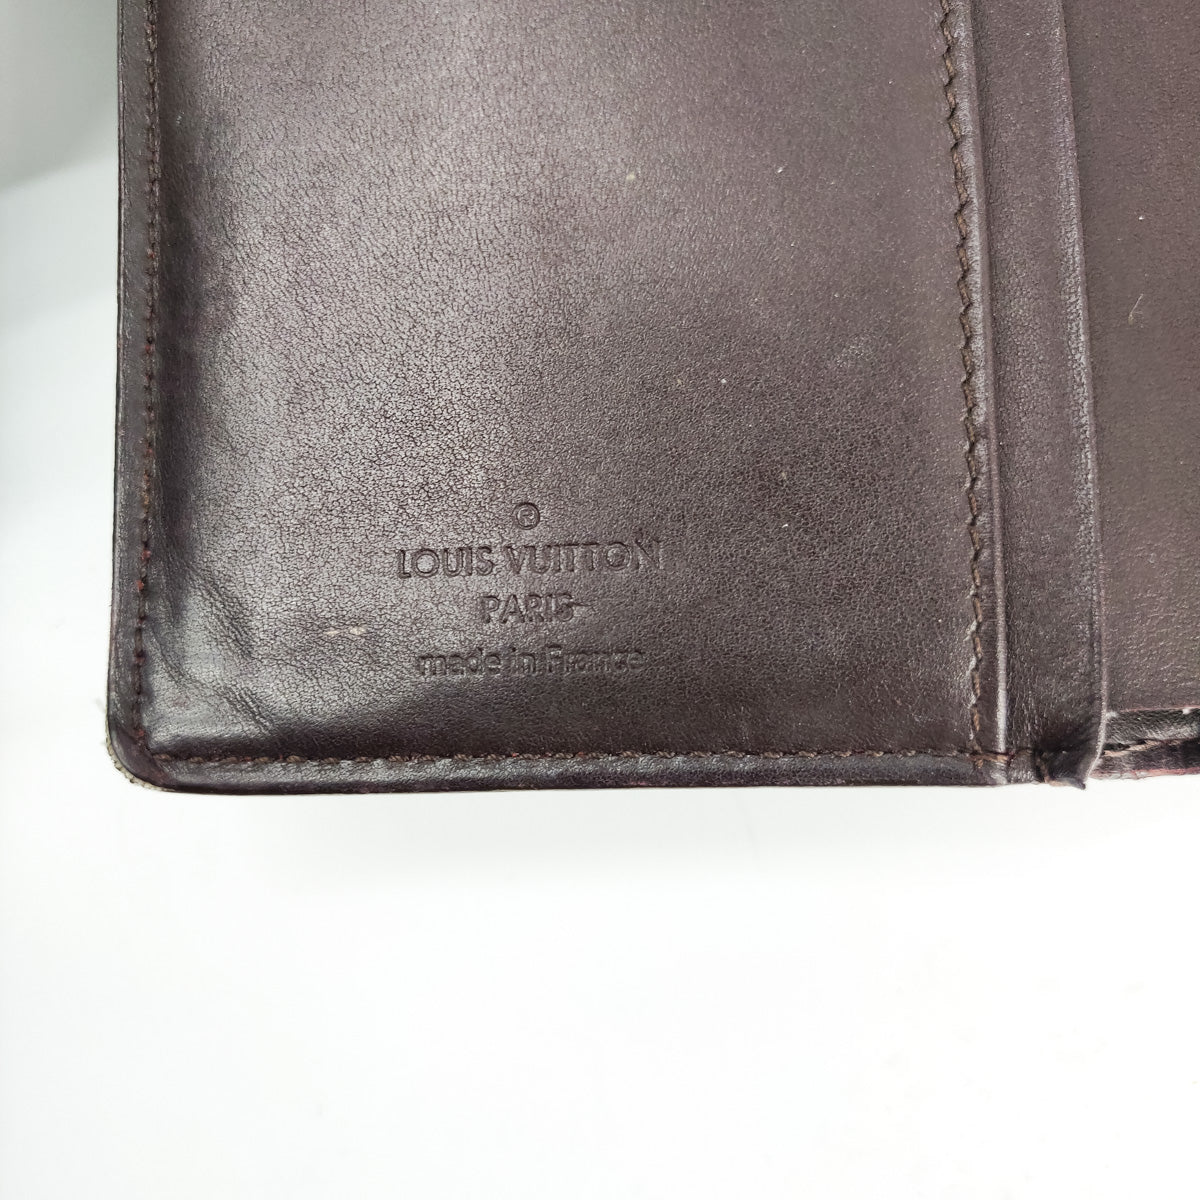 LOUIS VUITTON Monogram French Purse Wallet 1188408